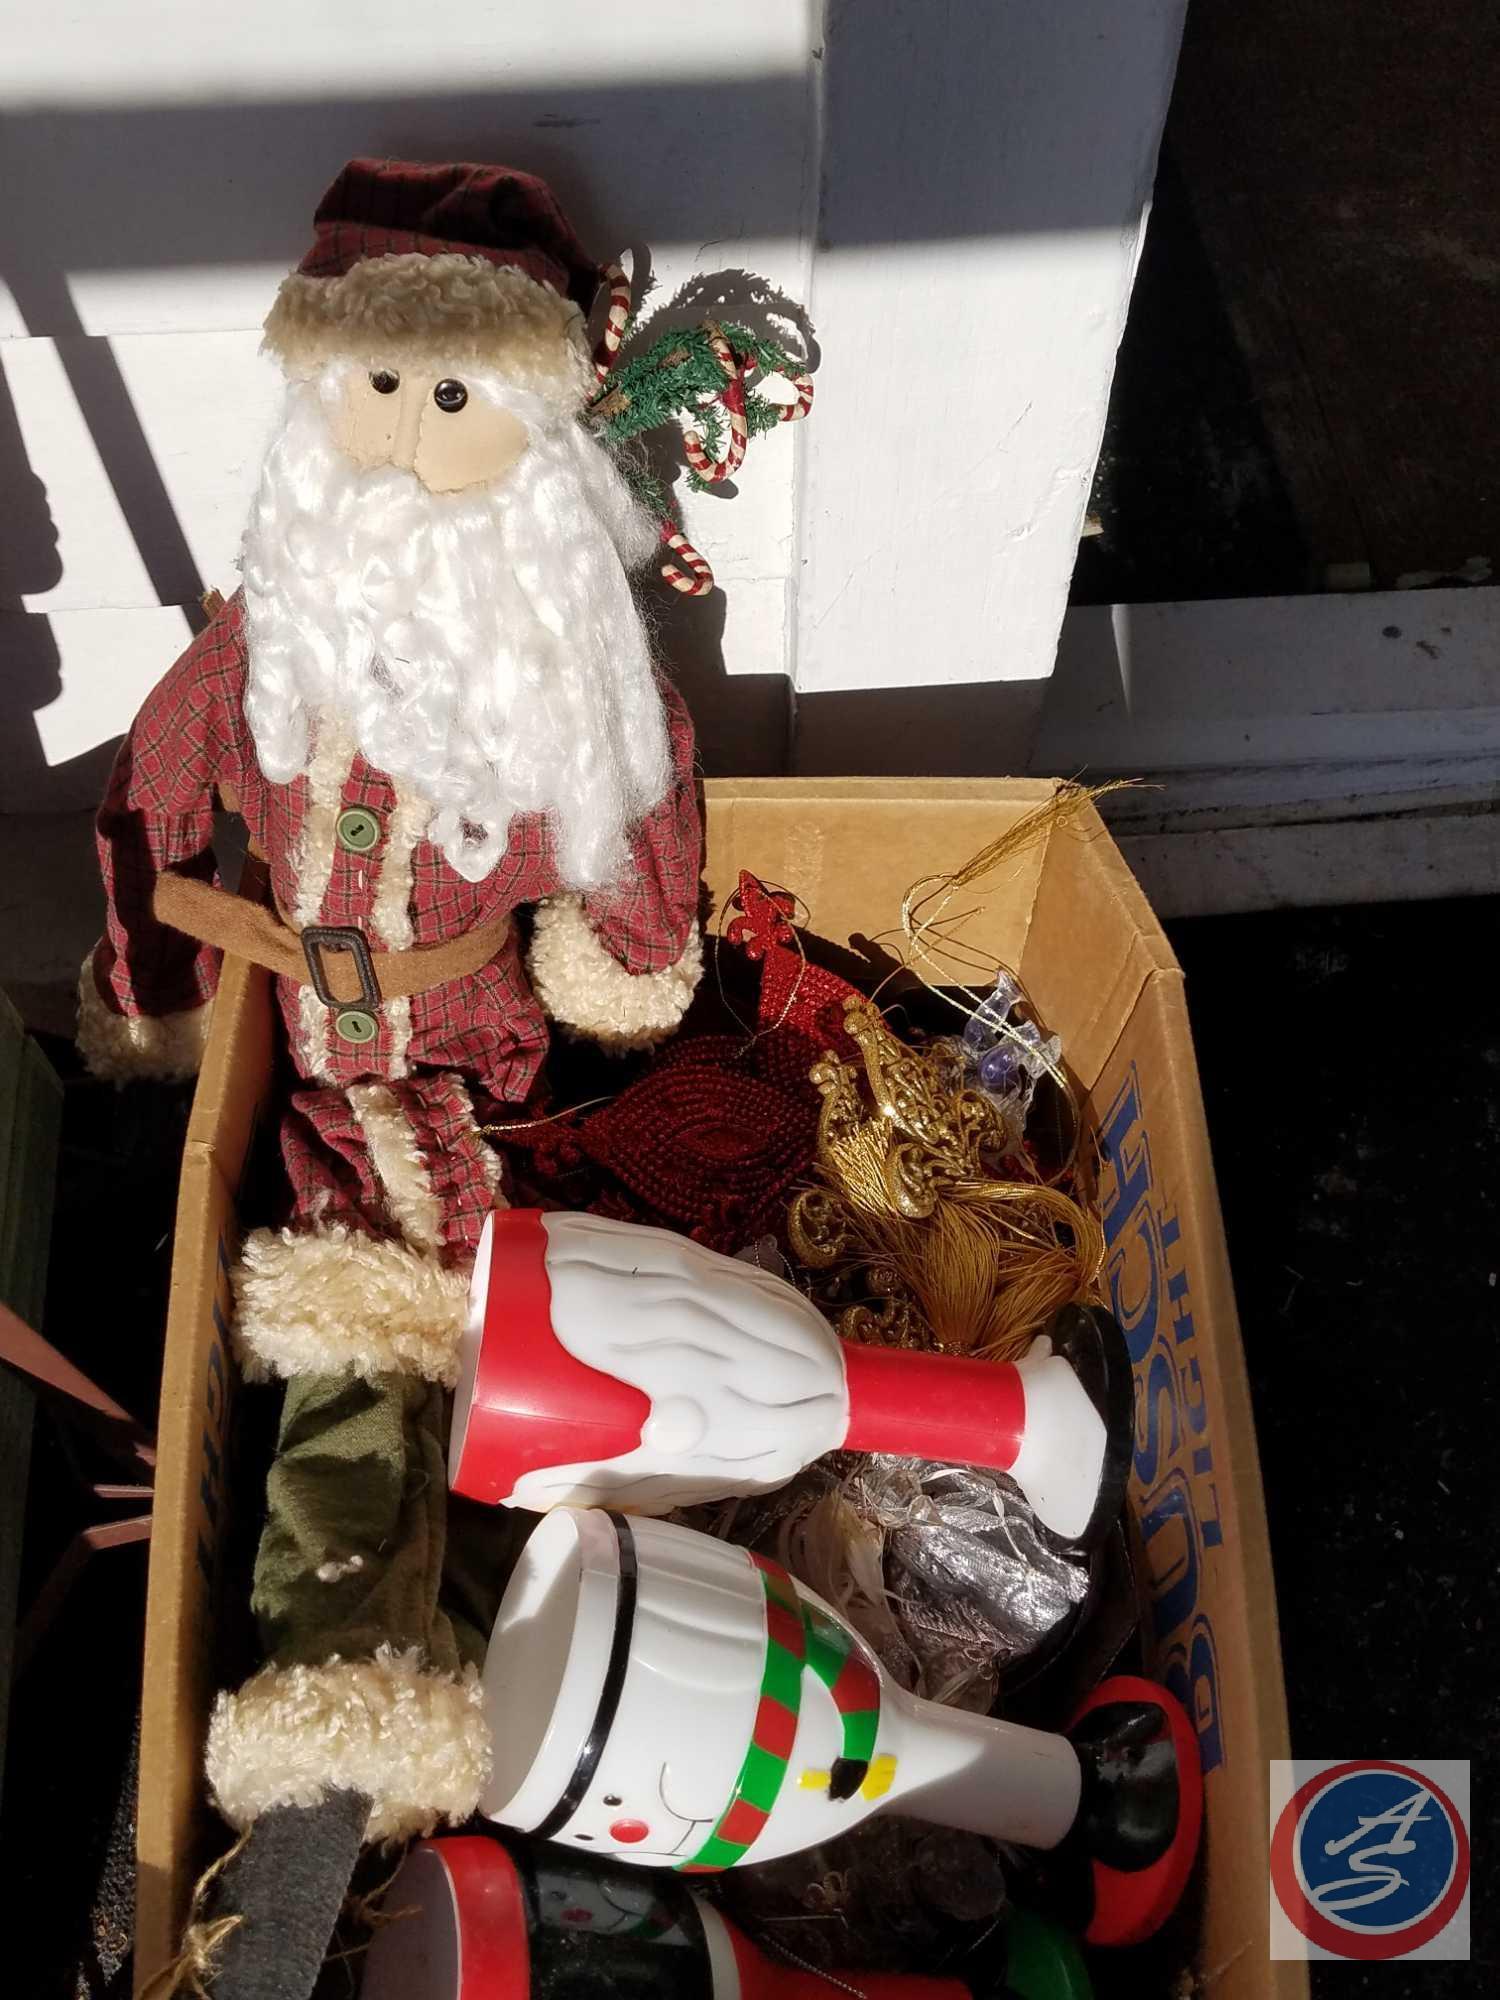 Broom, Dustpan, Wall Valance, Decorative Wagon, Nutcracker, Assorted Christmas Decorations and